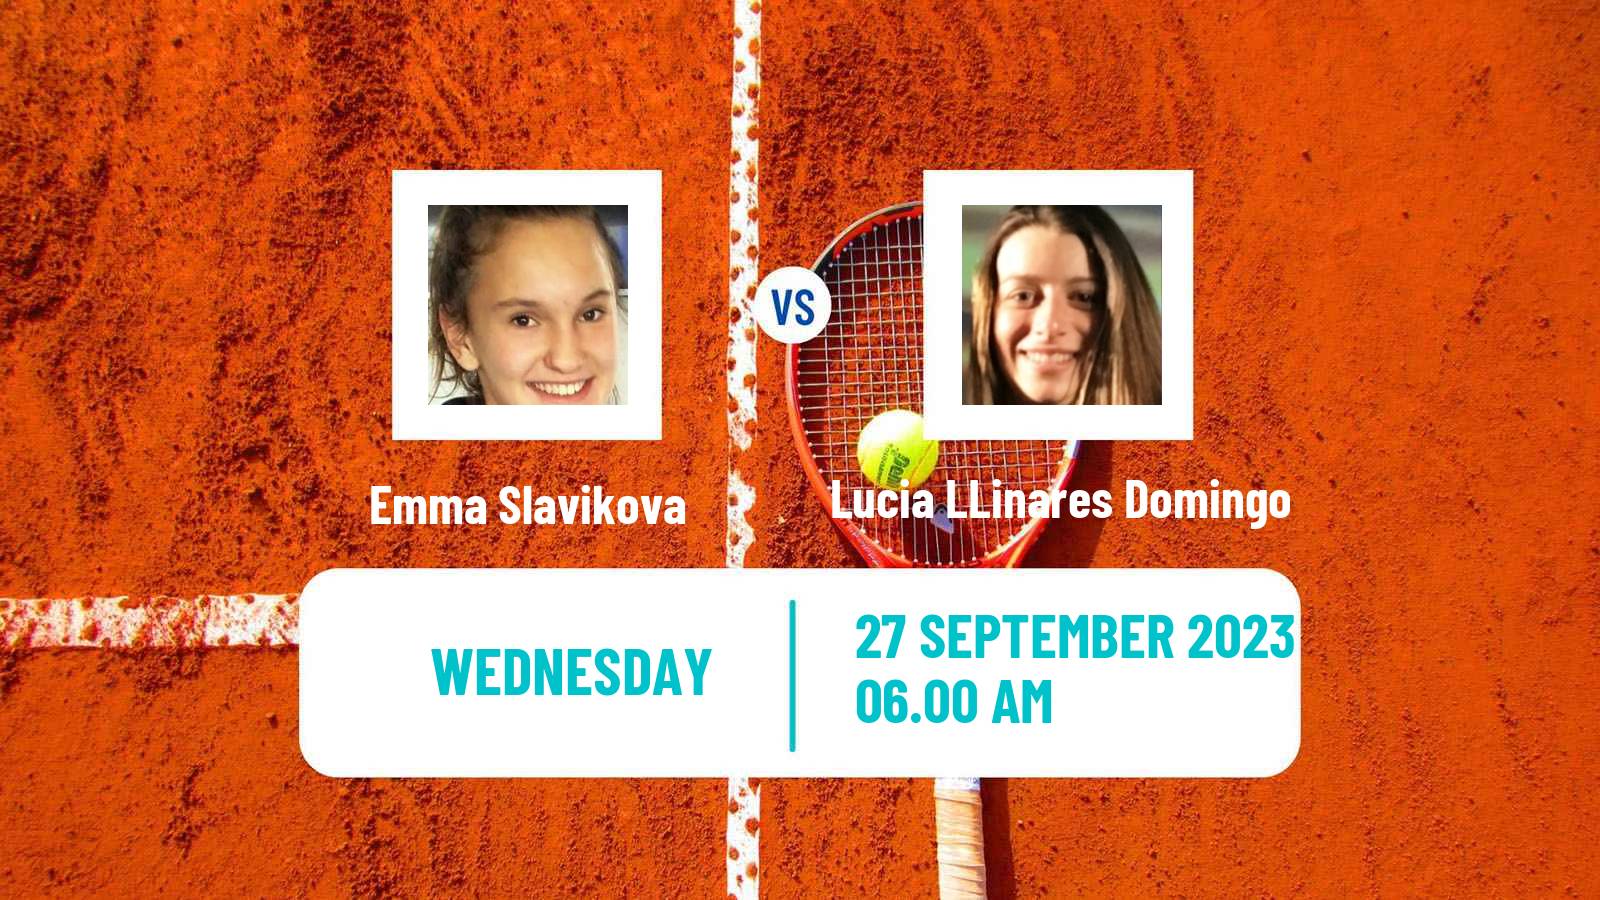 Tennis ITF W15 Monastir 34 Women Emma Slavikova - Lucia LLinares Domingo